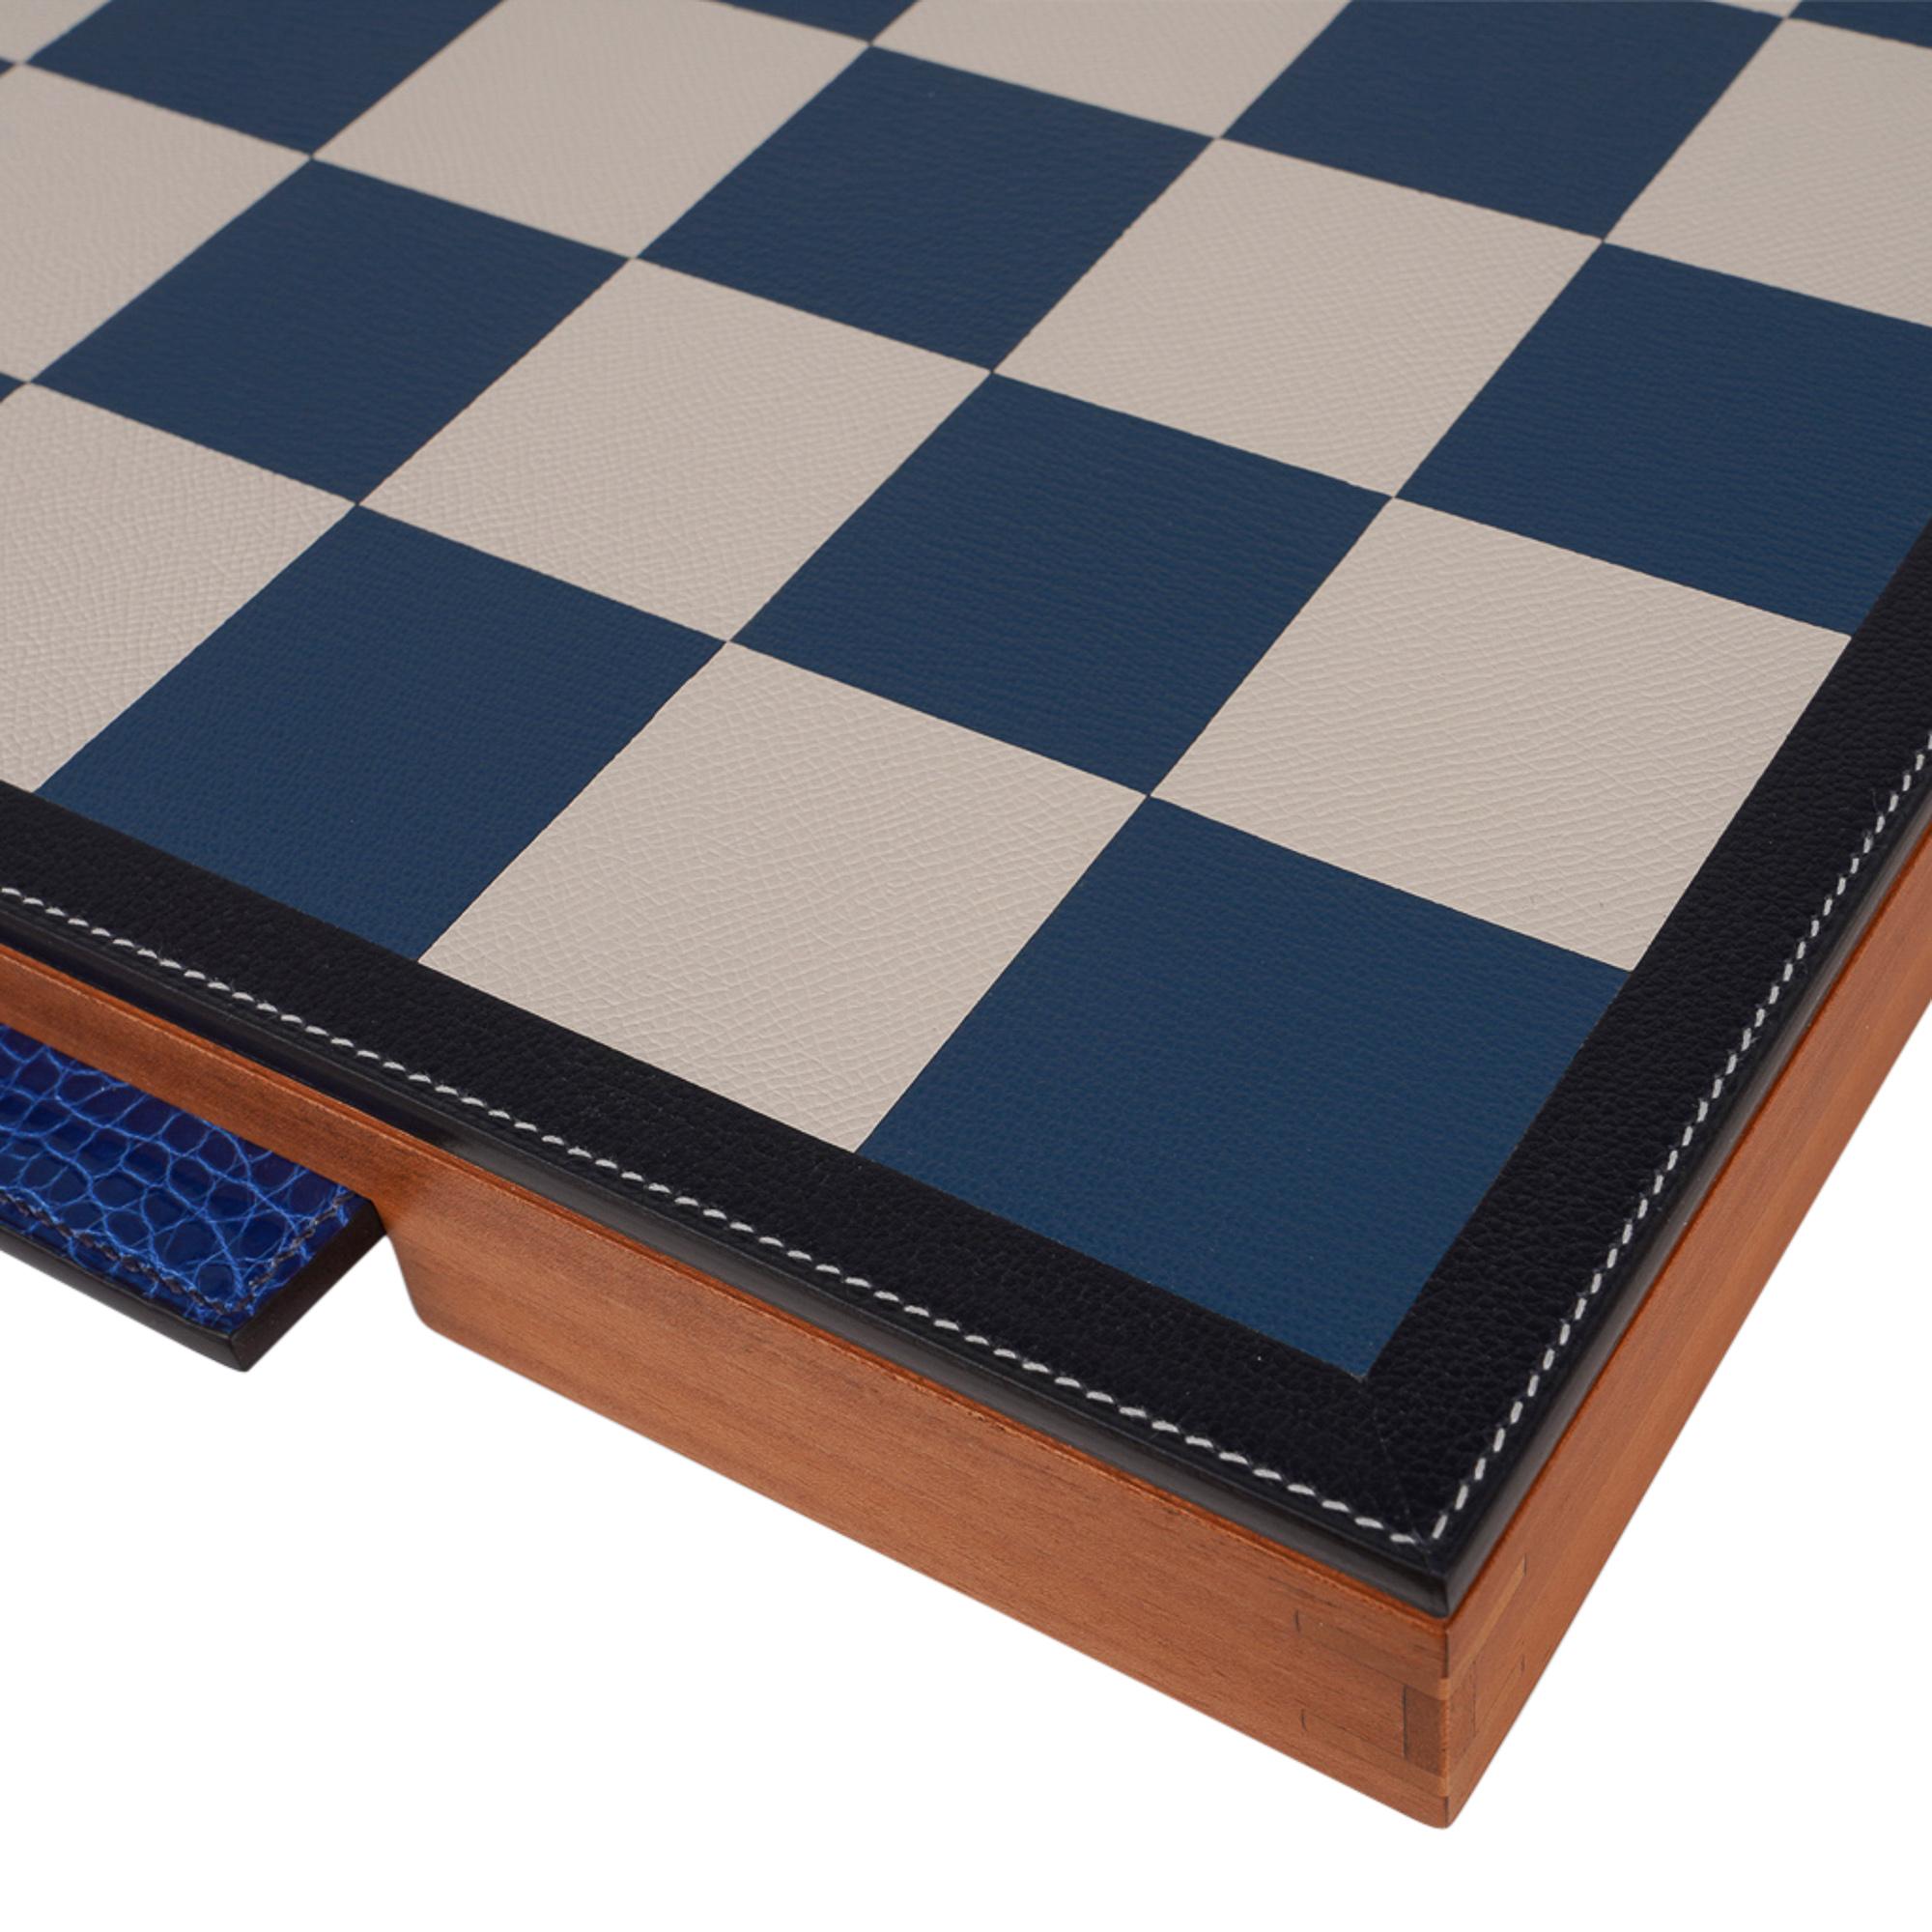 Hermes Samarcande Chess Set Sycamore Mahogany Crocodile Handles New w/ Box For Sale 3